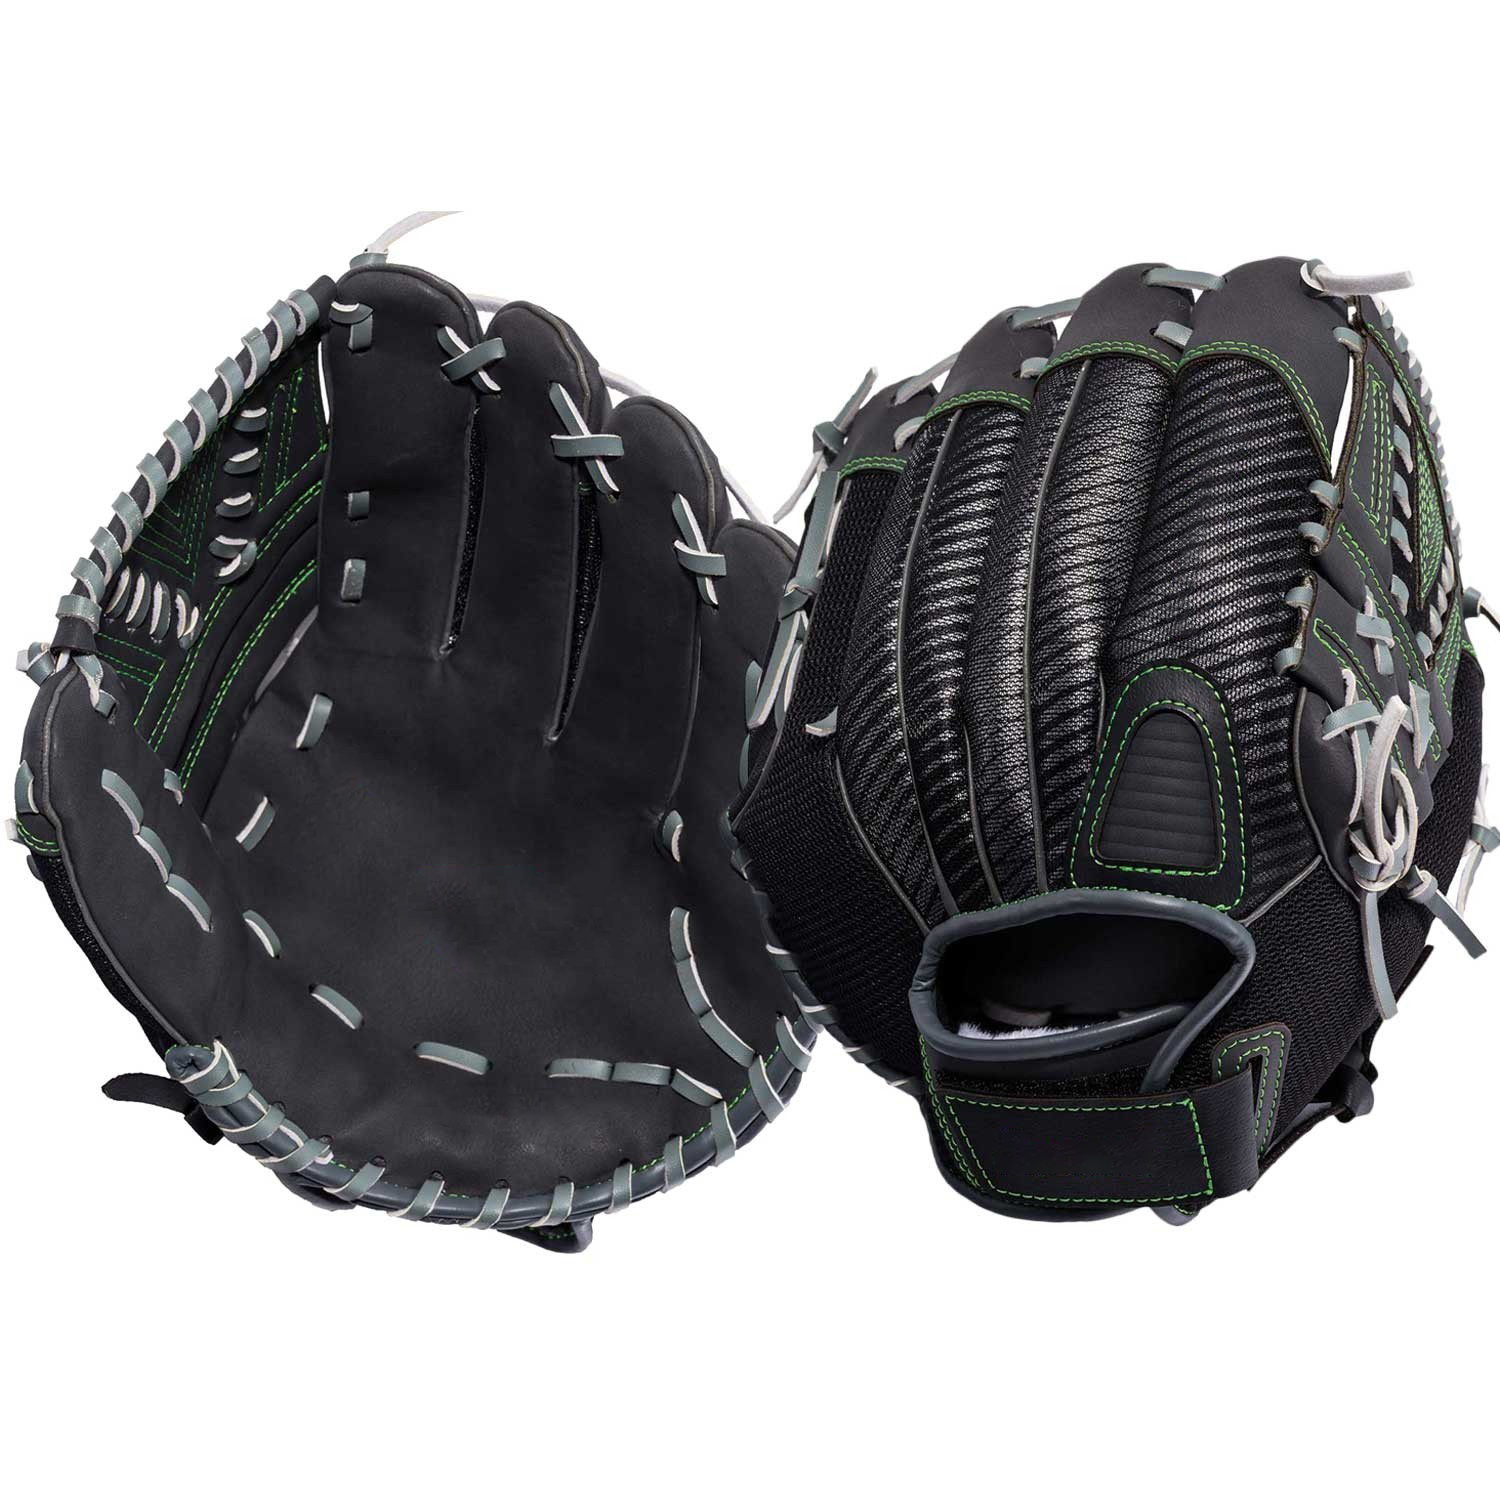 Hot sale high quality  customizable baseball gloves lightweight durable  baseball gloves